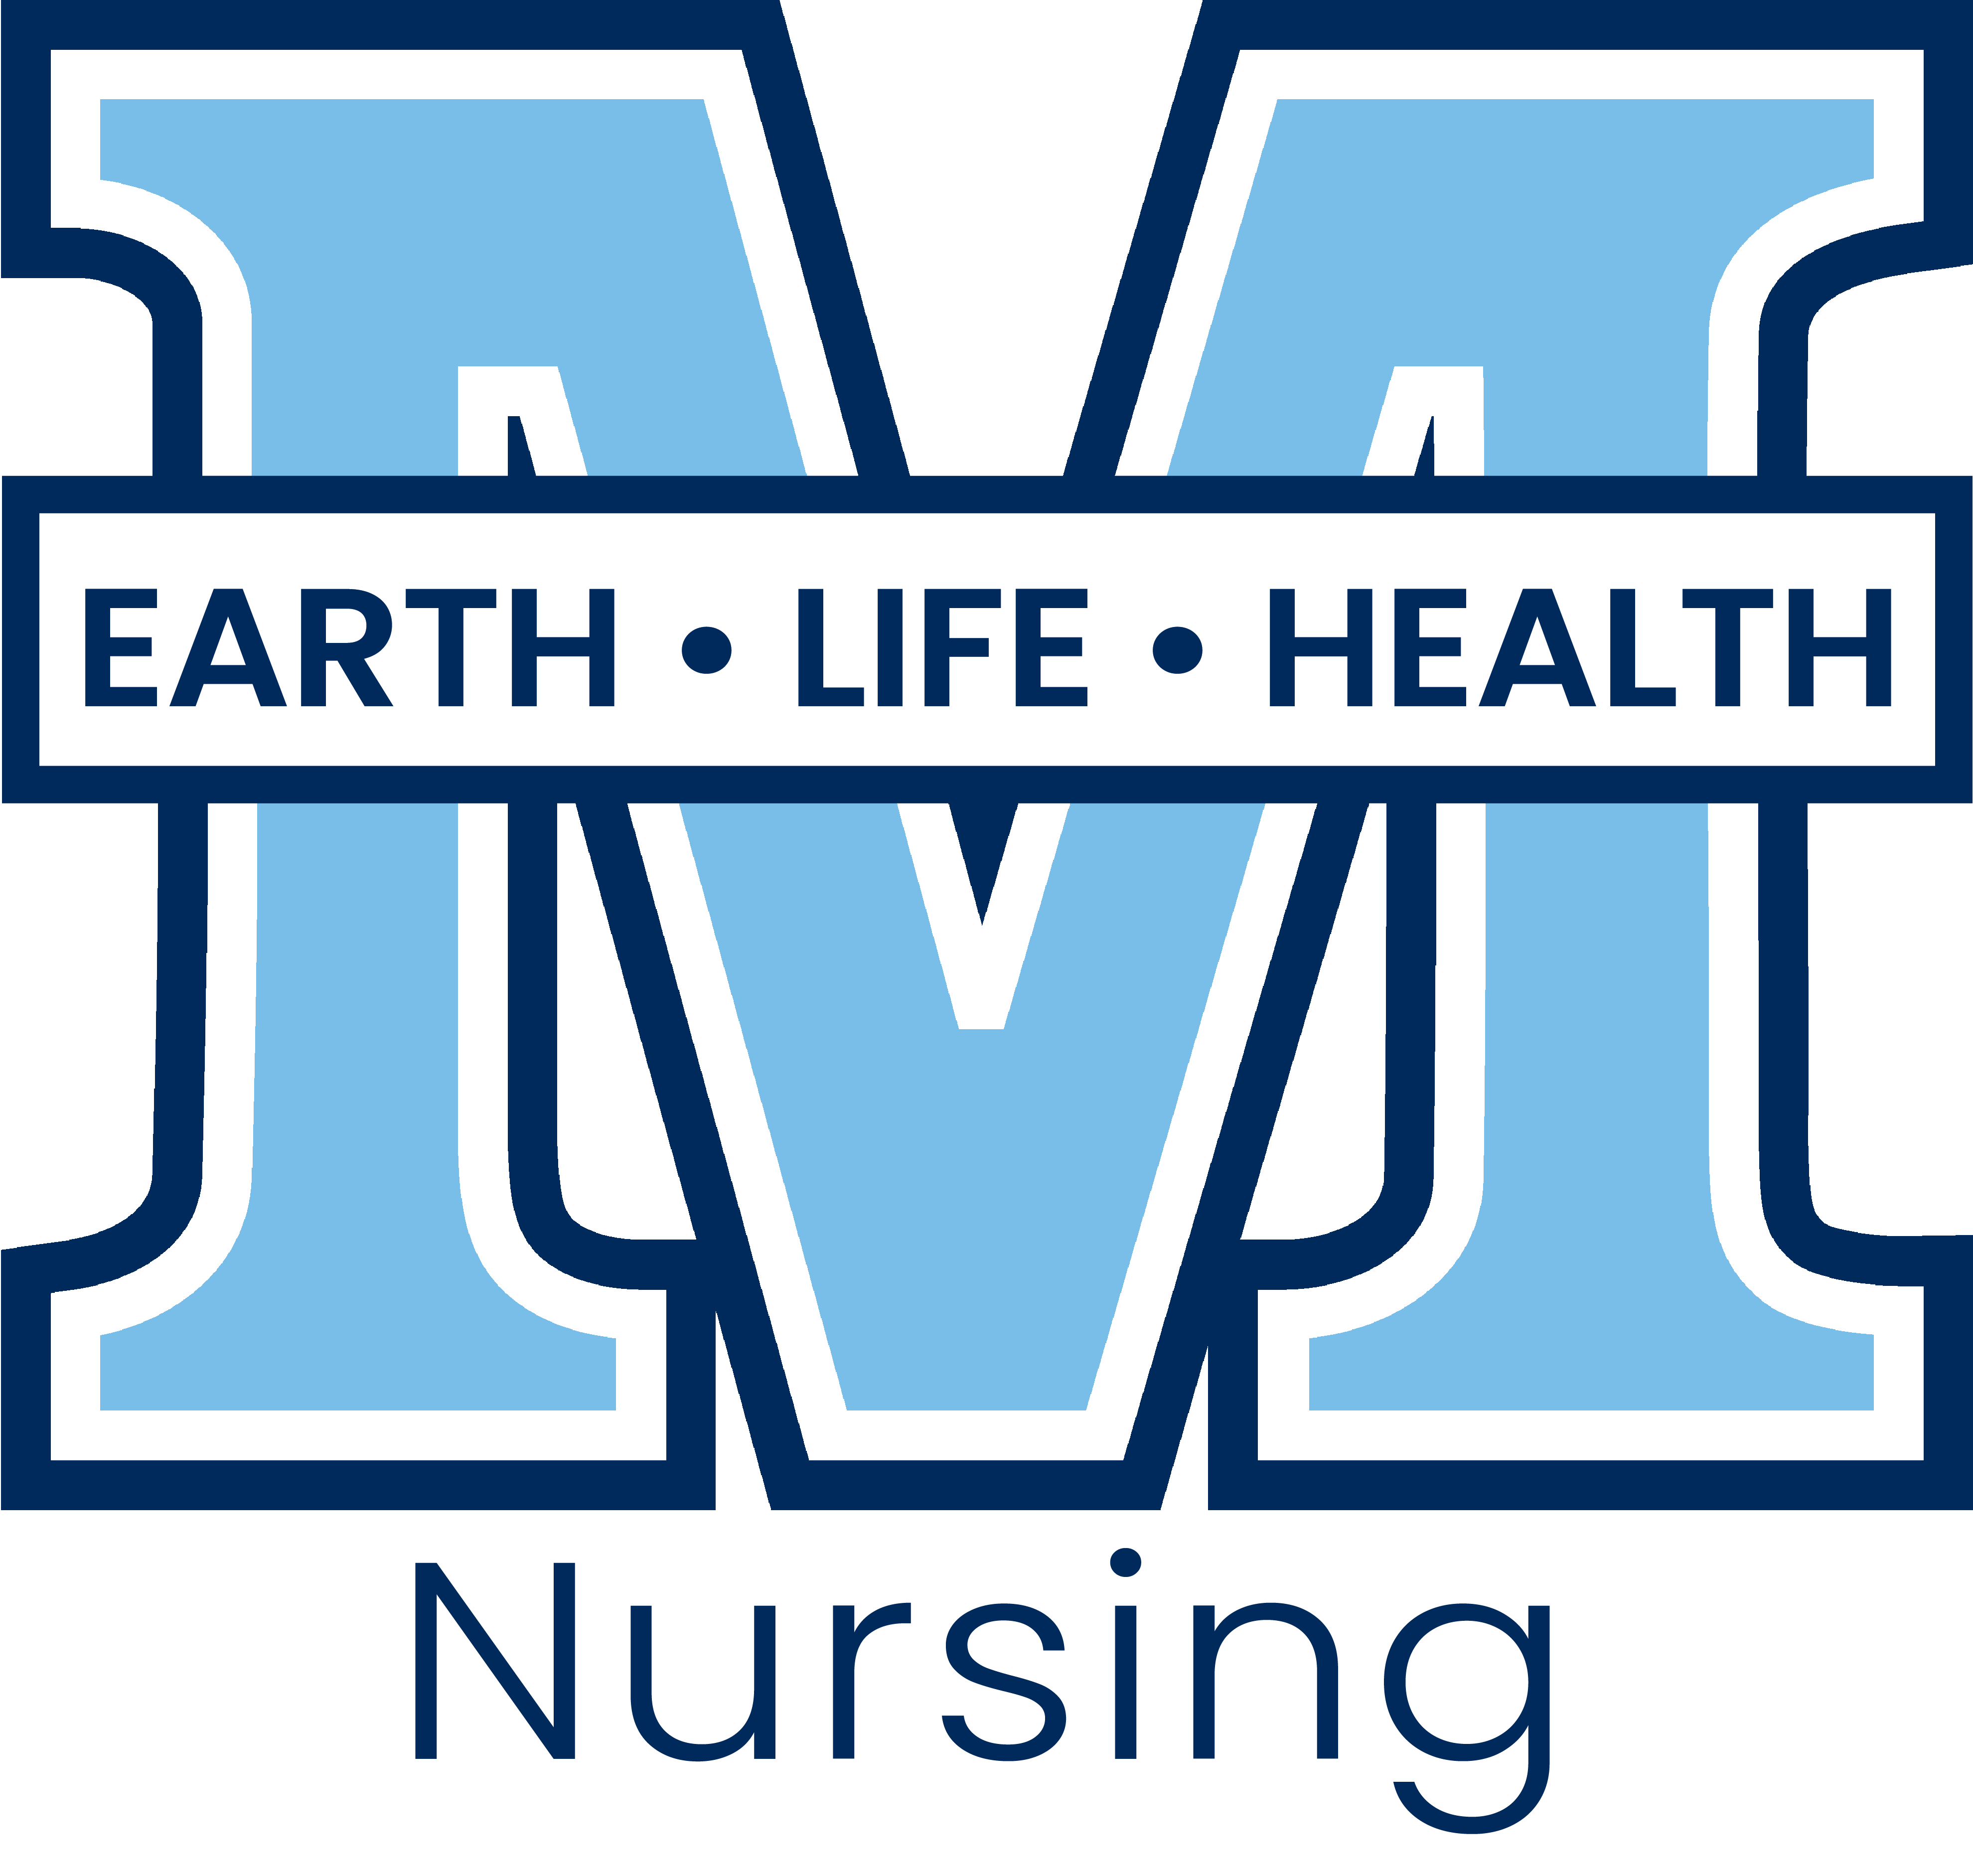 College M logo with nursing